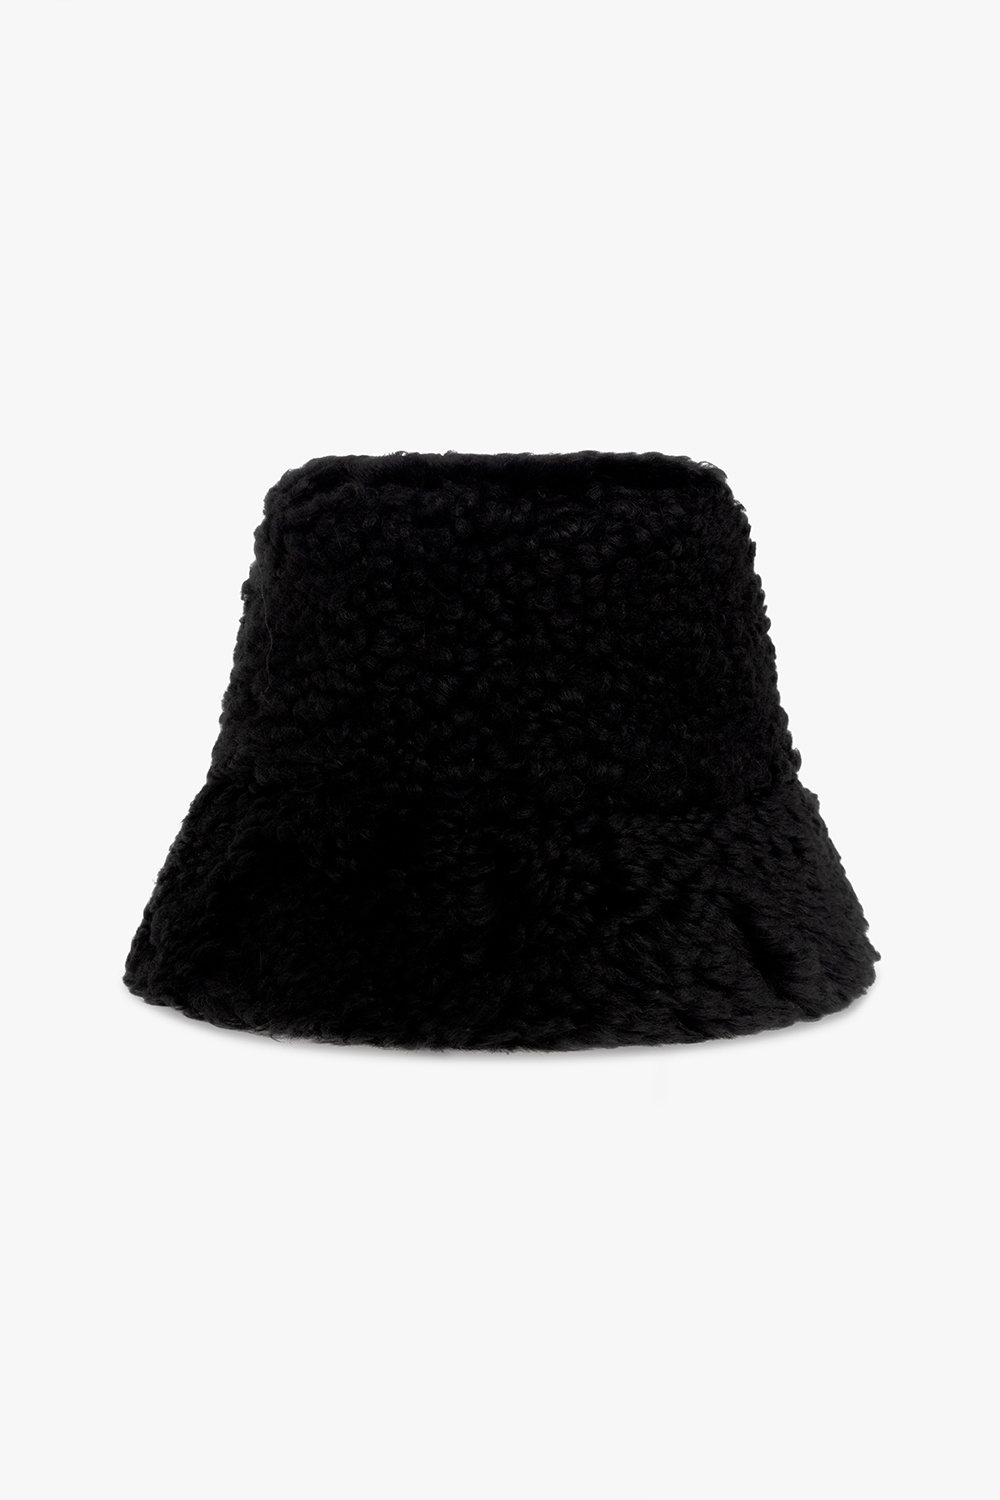 Cult Gaia ‘Kumi’ fur bucket hat